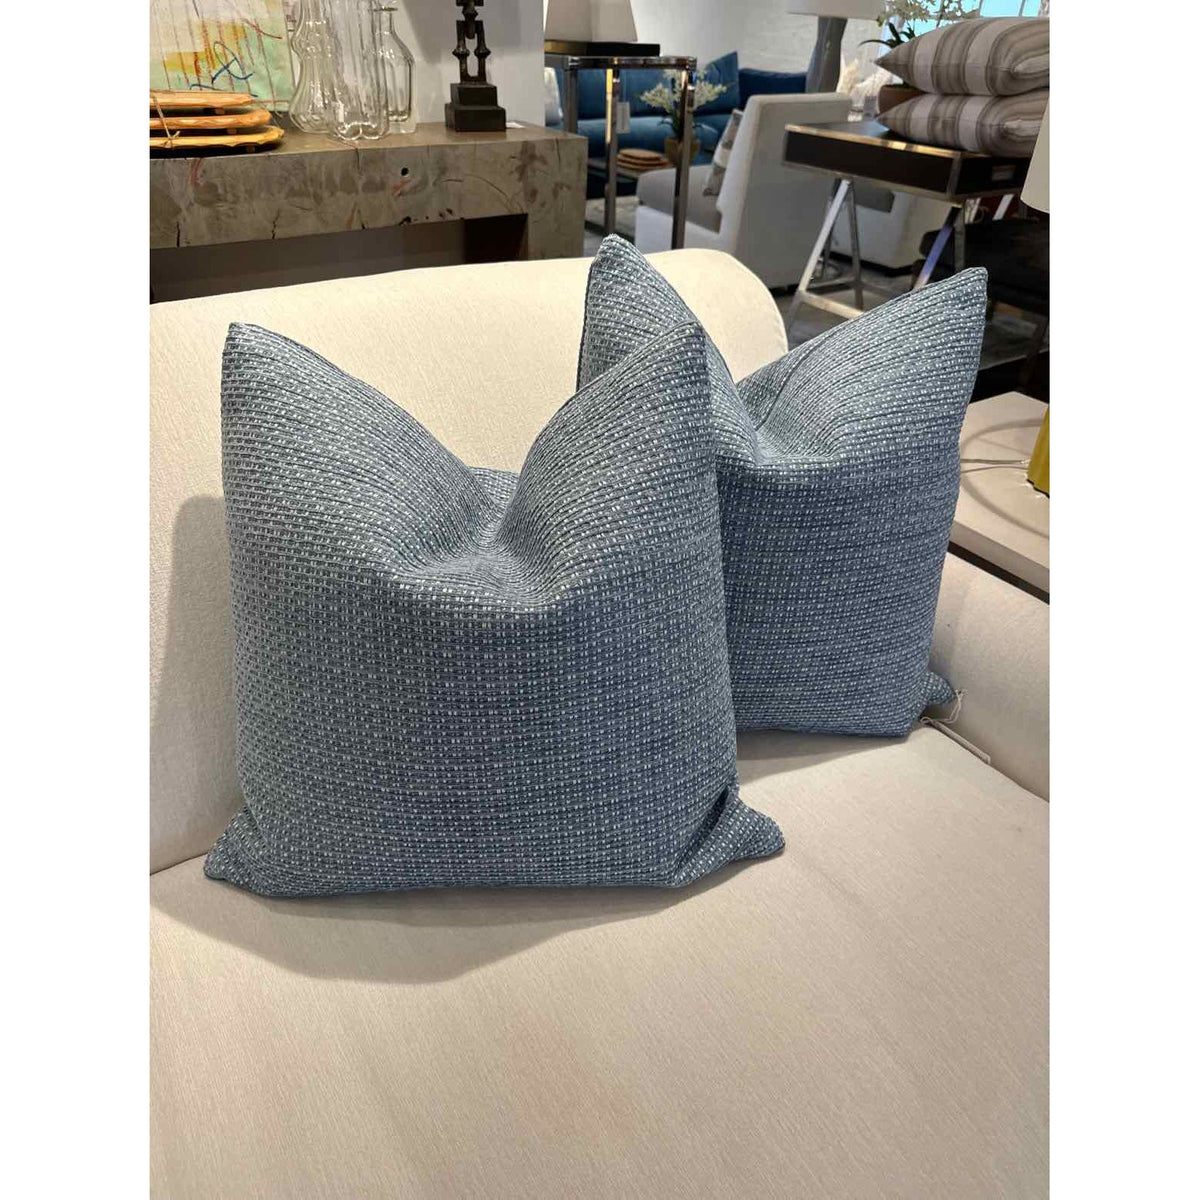 Pair of Light Blue Chenille Pillows 20"x20"